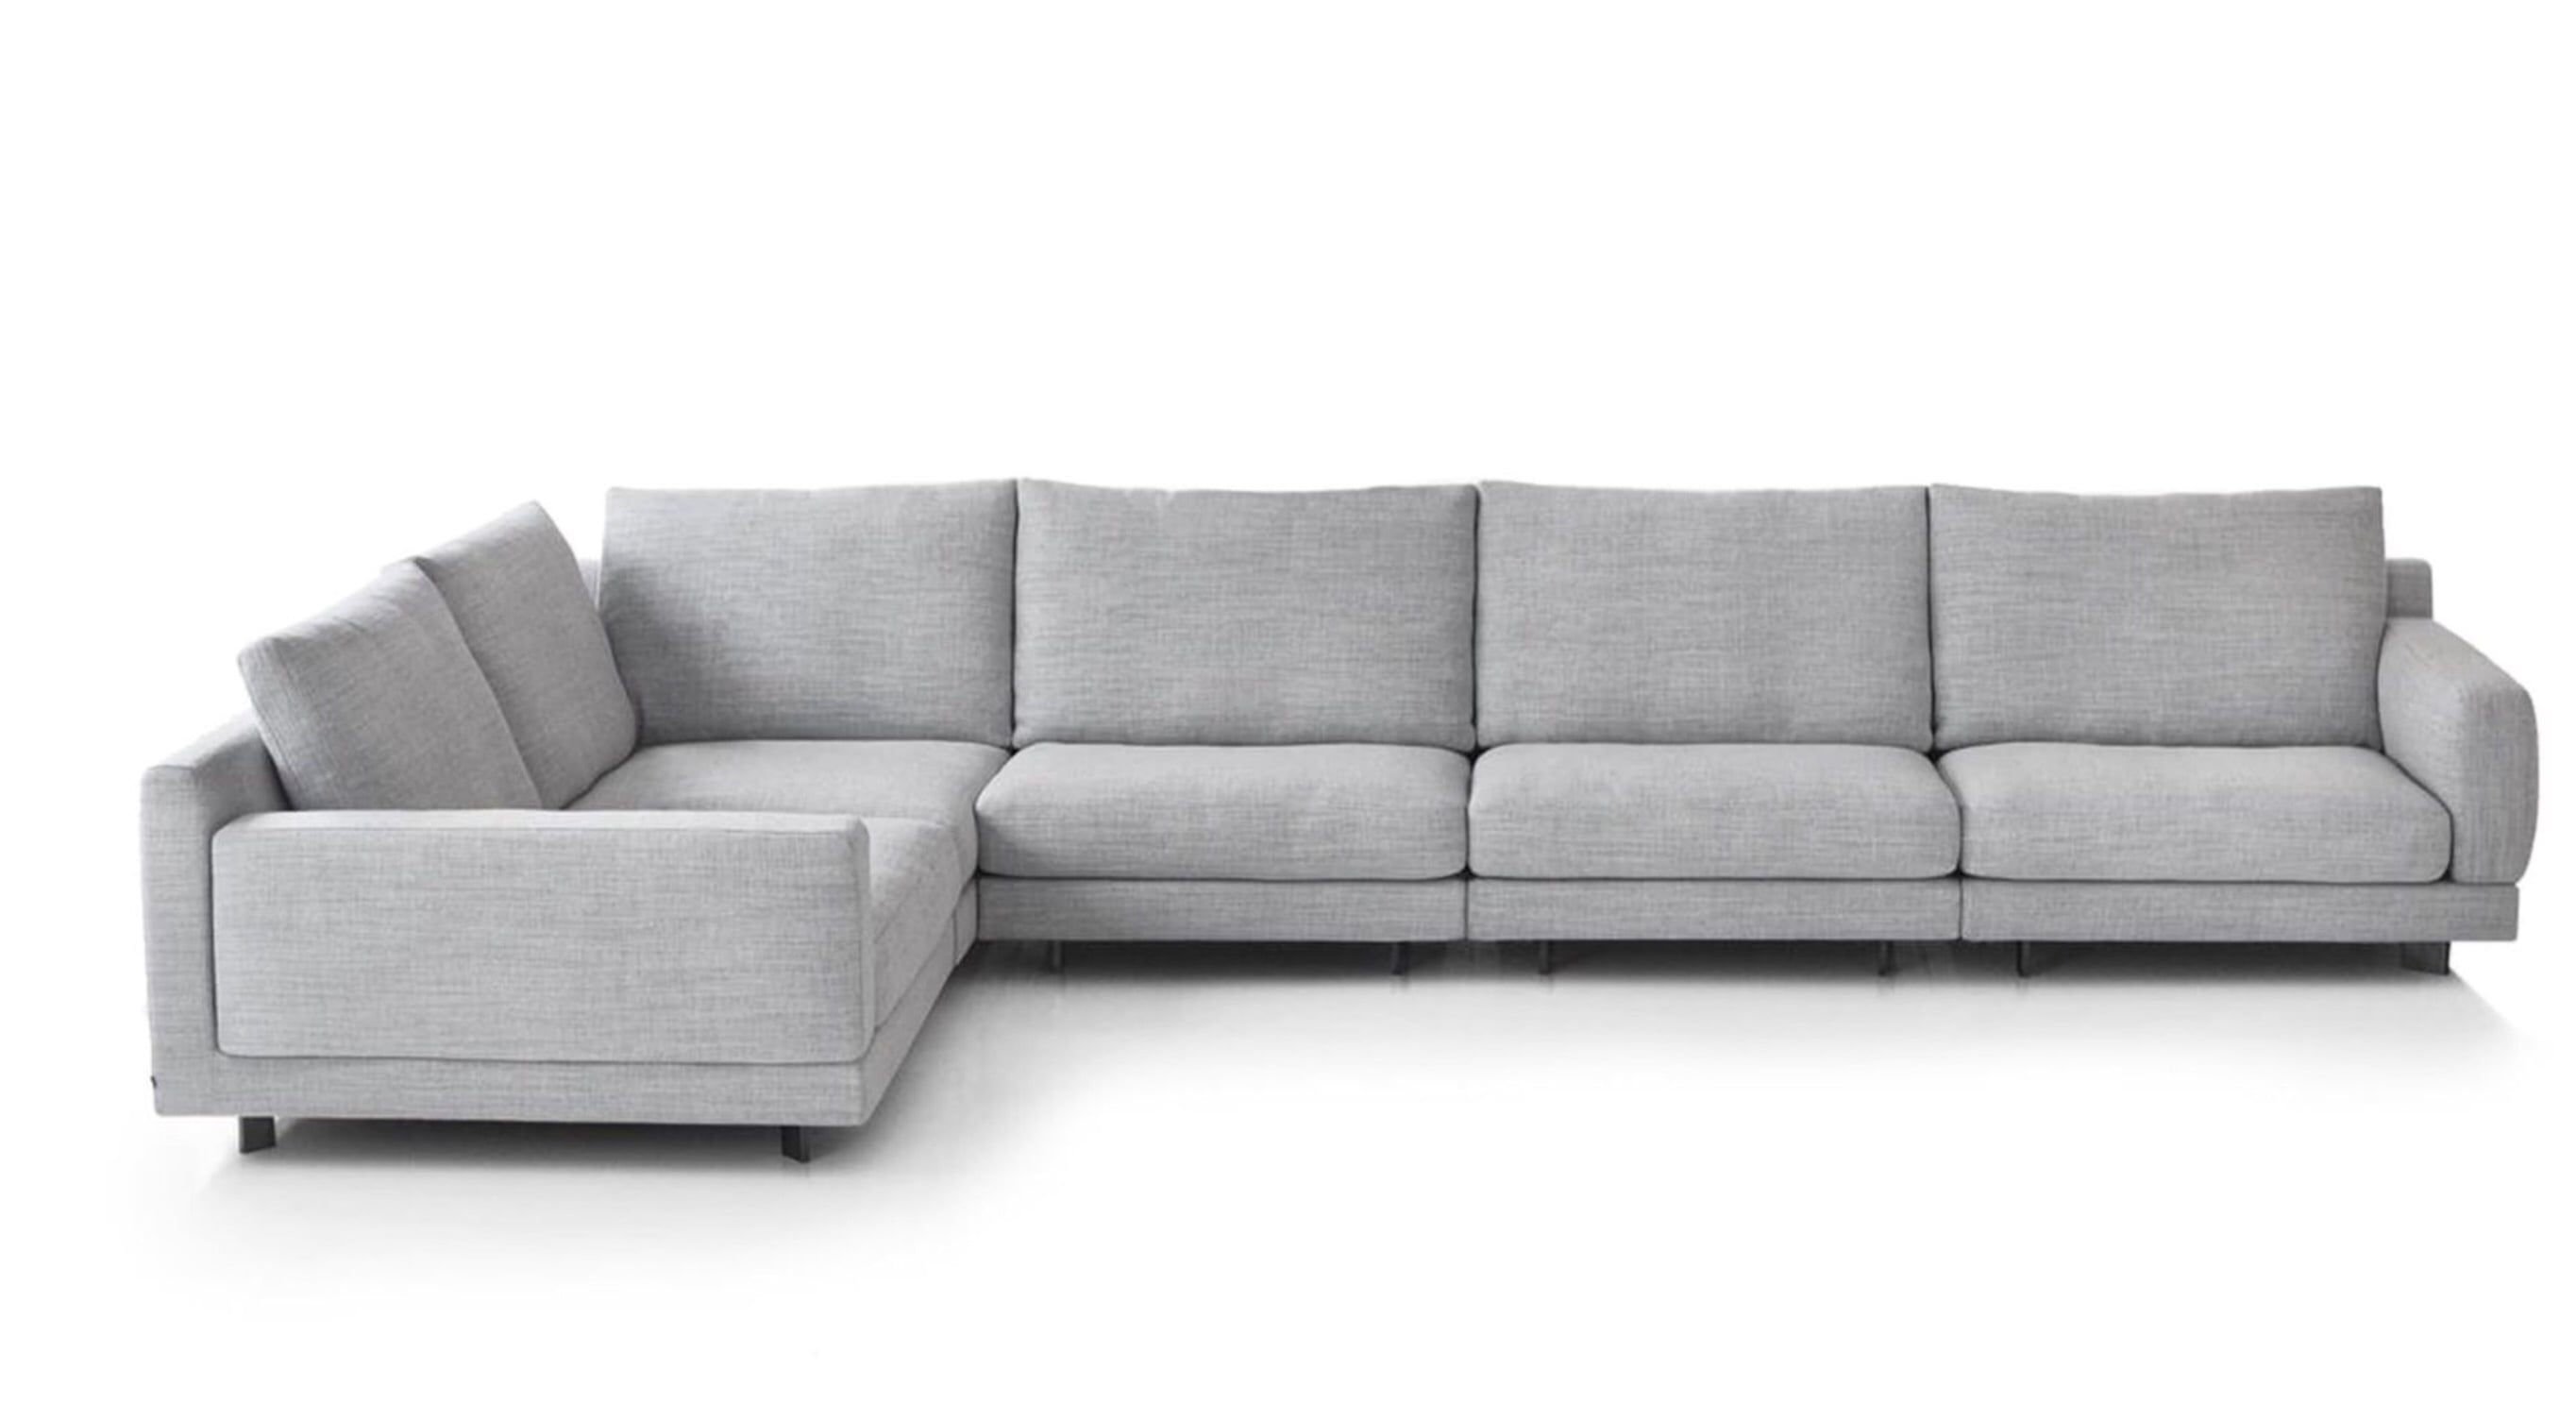 Made to Order Furniture. - Sofa 003-01